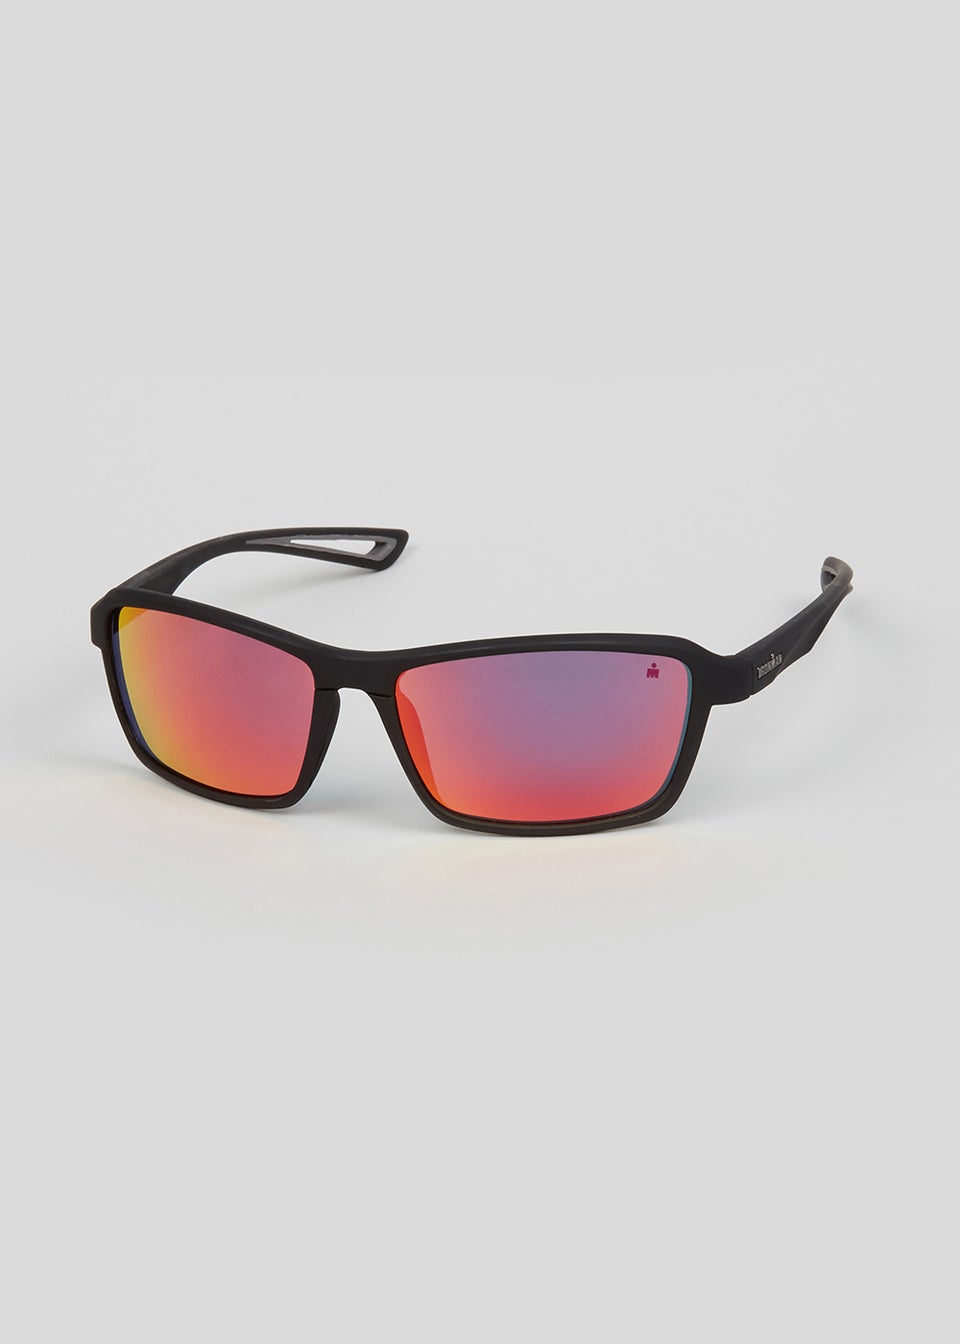 Foster Grant Tinted Sports Sunglasses - Matalan